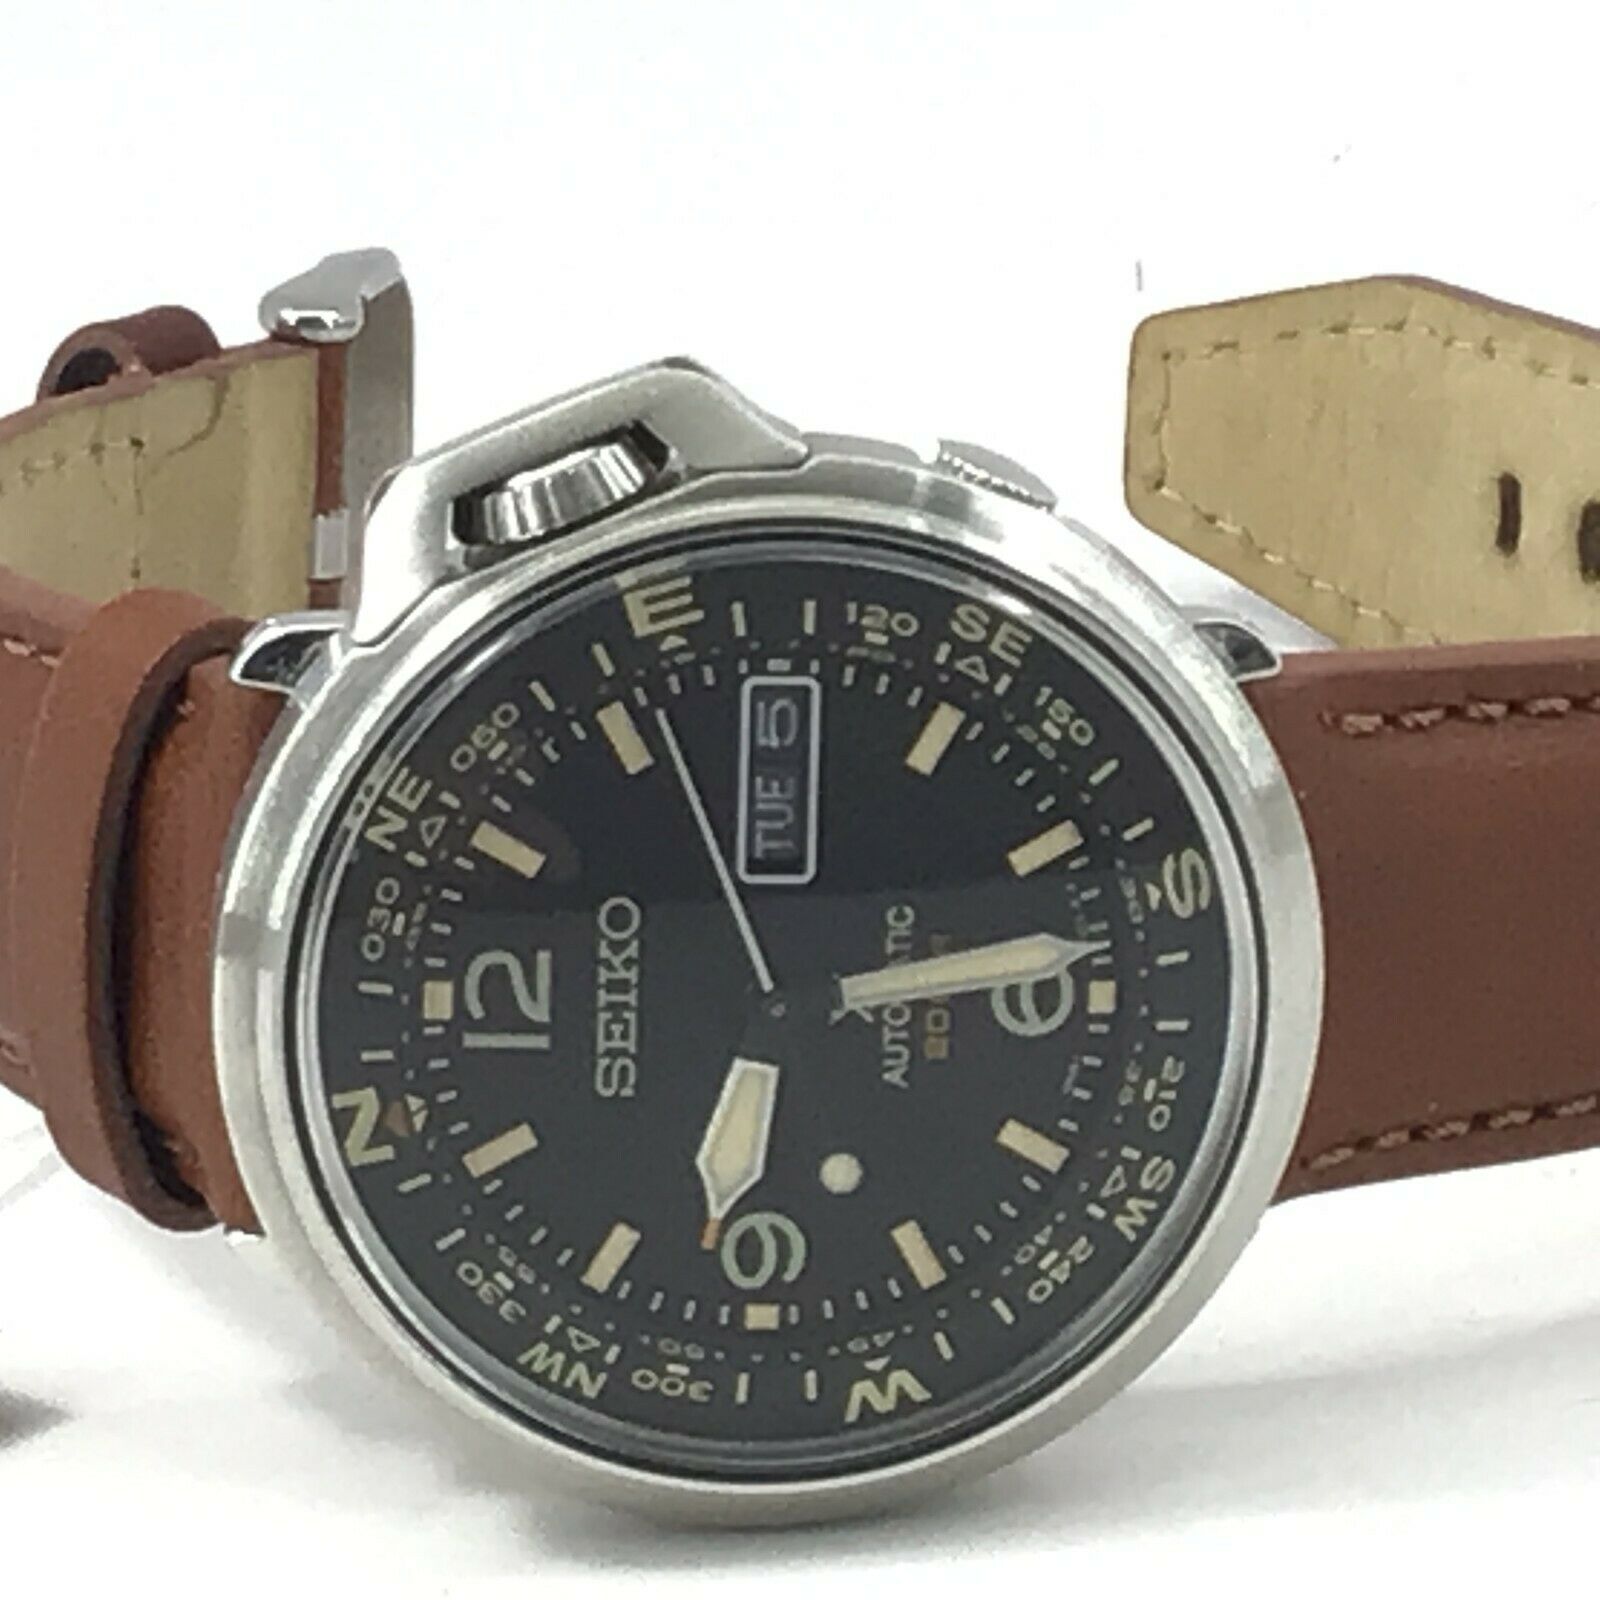 Seiko Men's Prospex Automatic Land Series Compass Watch - SRPD31K1 |  WatchCharts